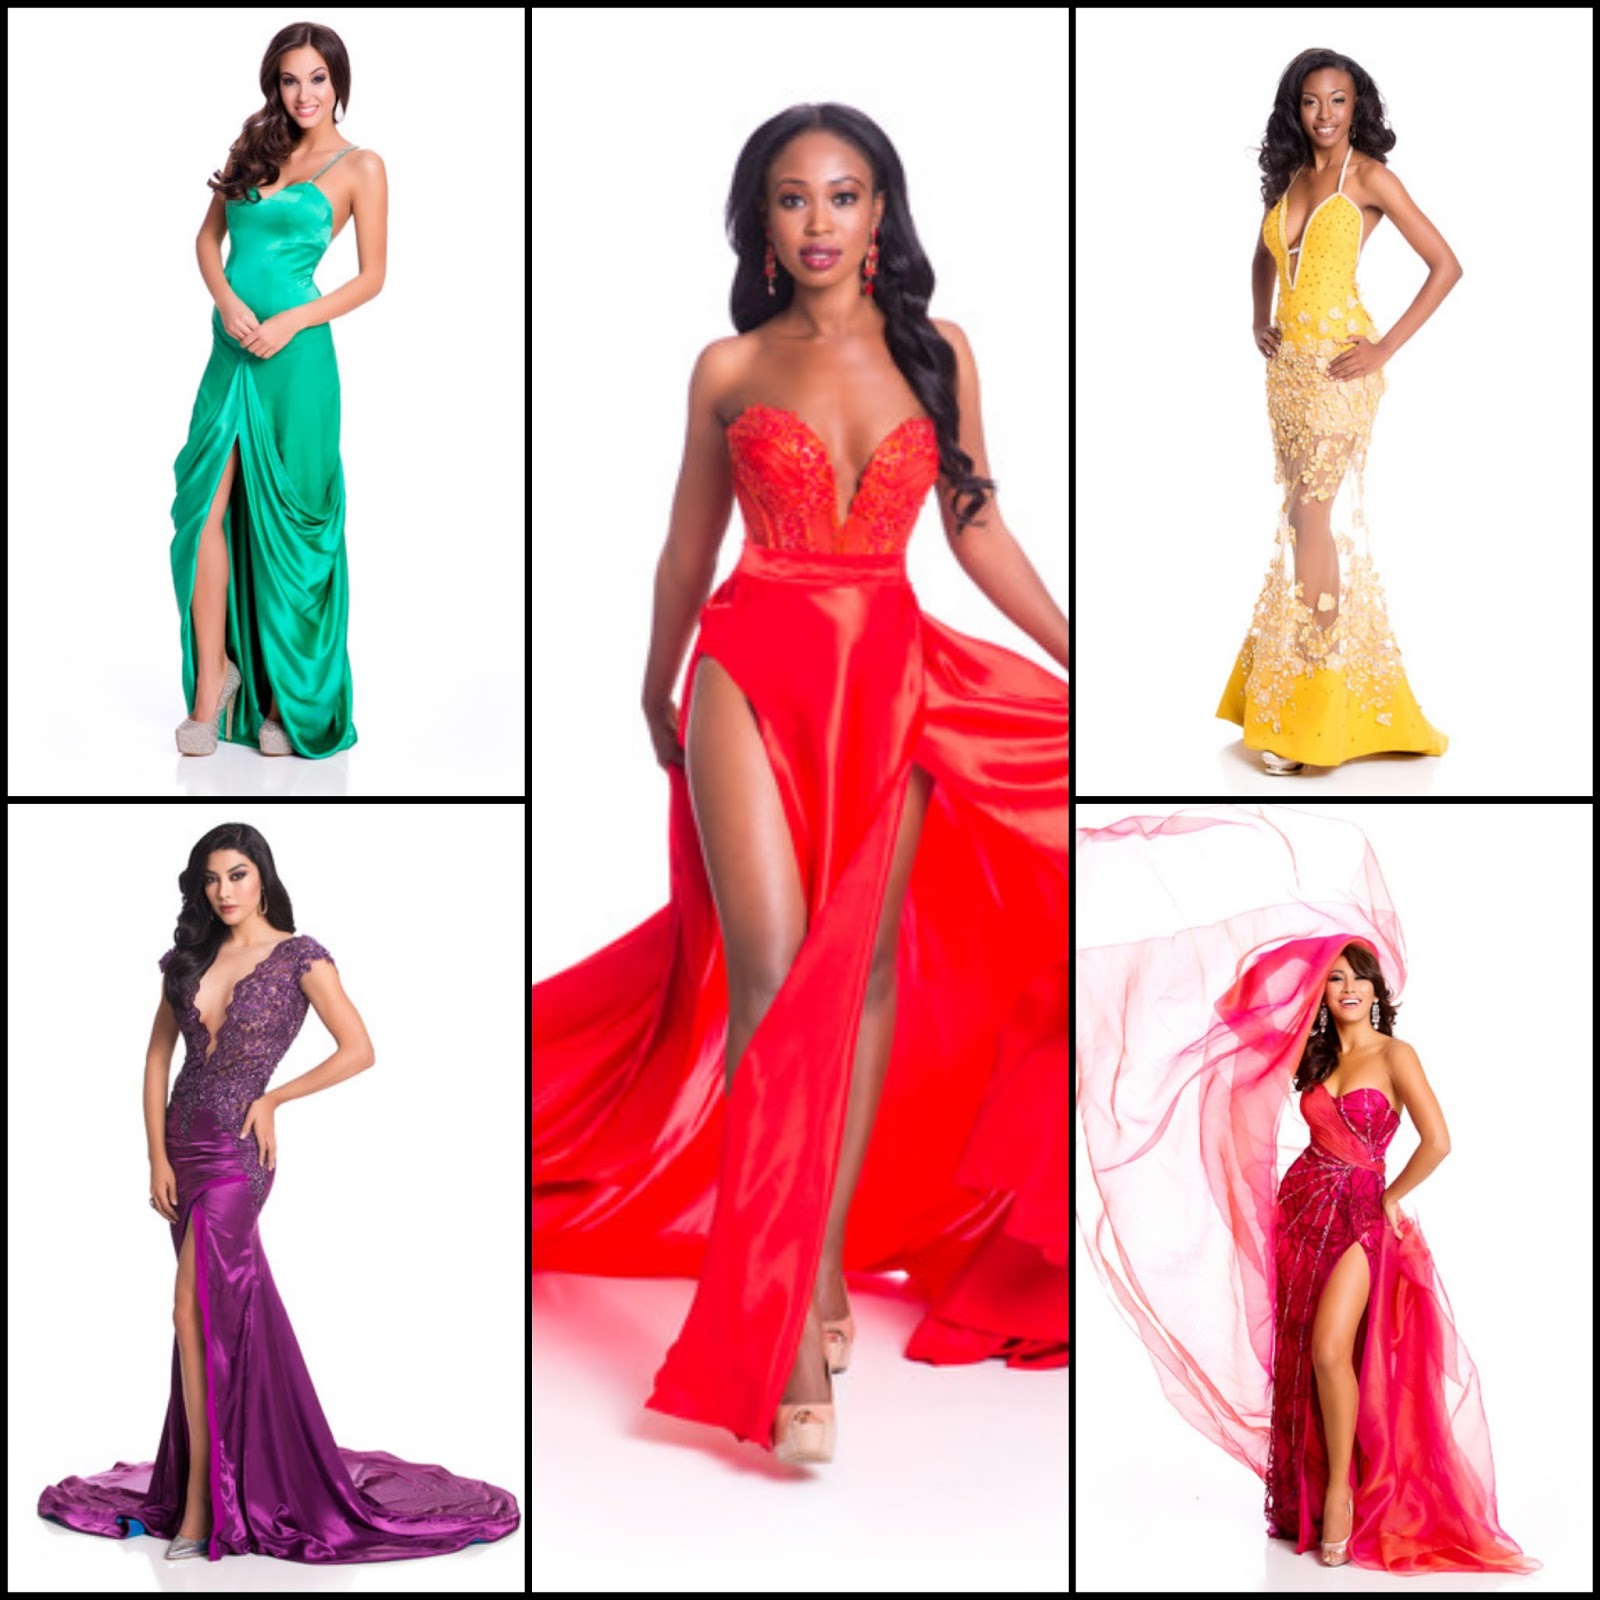 Miss Universe 2015 evening gown portraits